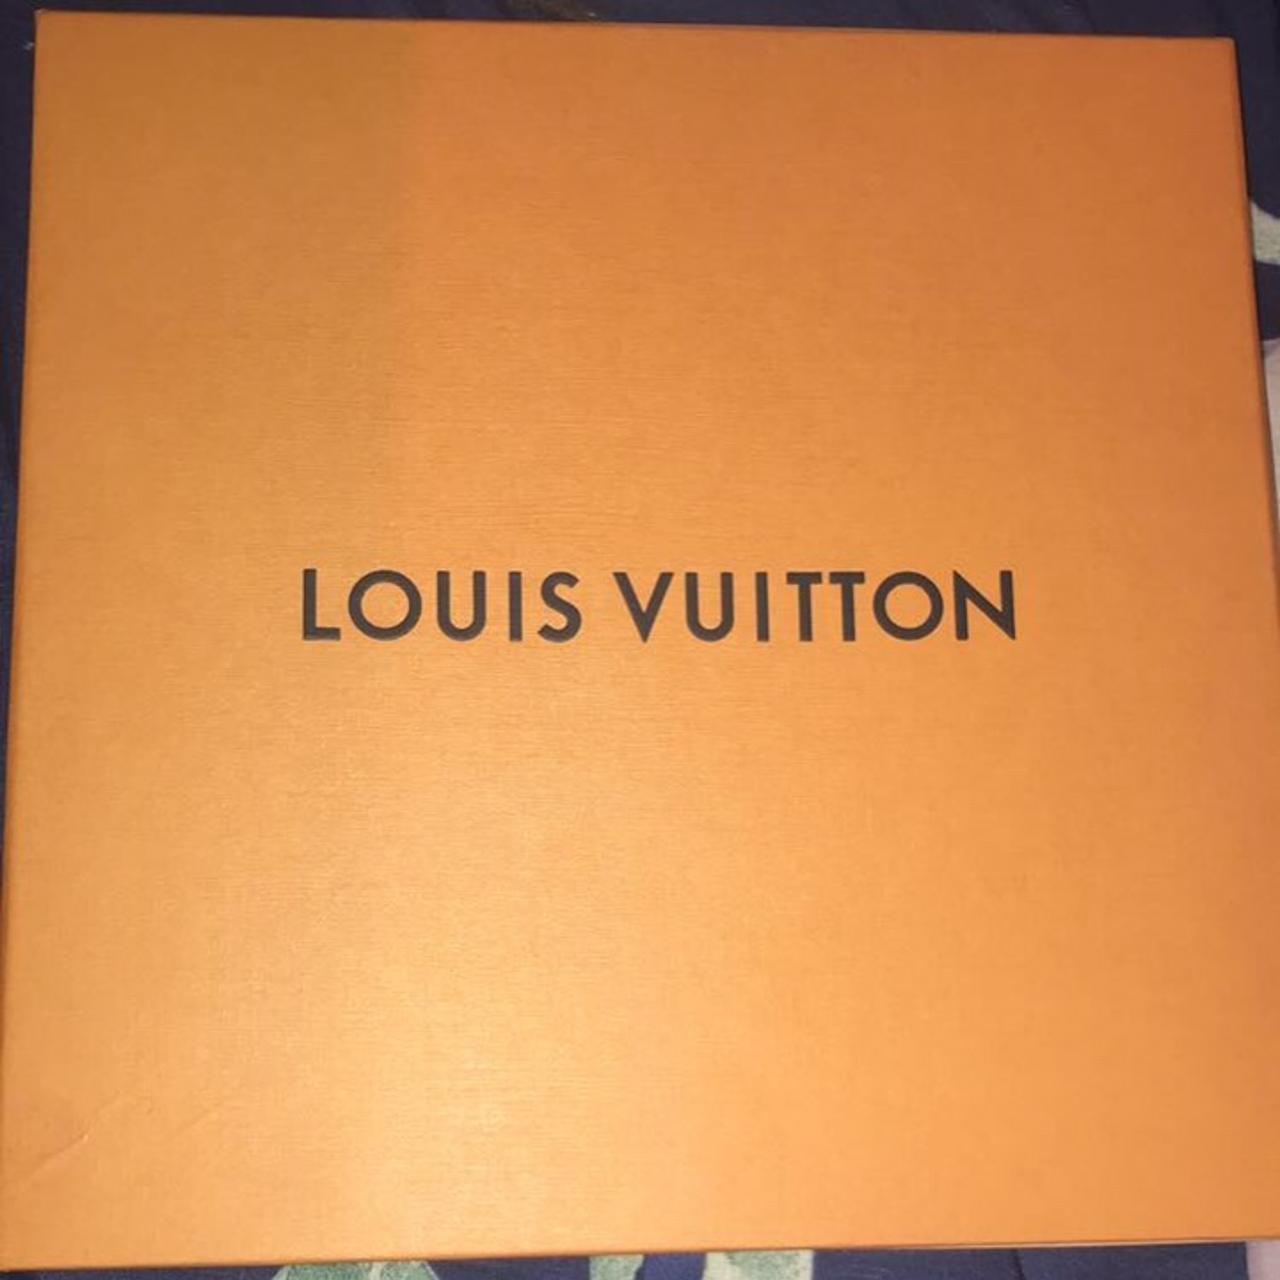 SOLD❌ SOLD❌ SOLD❌ Louis Vuitton Monogram Eclipse - Depop